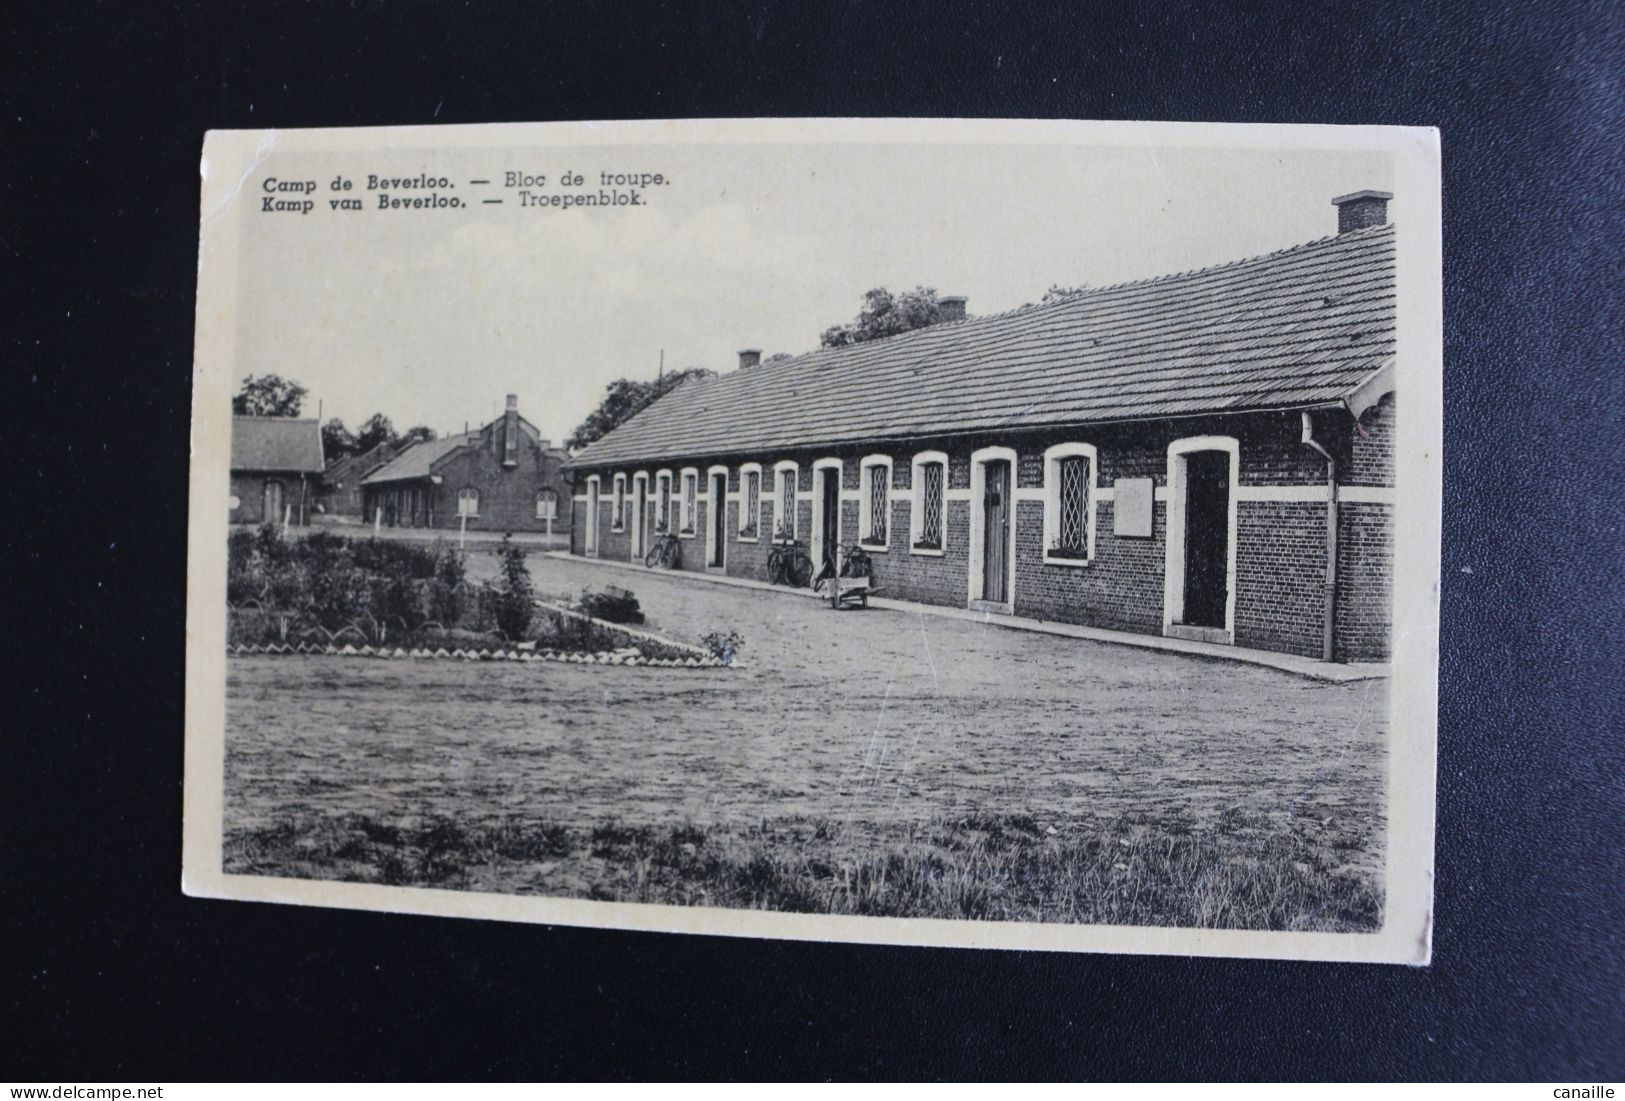 S-C 177 / Photo De Militaire -  Limbourg  Leopoldsburg (Camp De Beverloo) - Camp De Beverloo - Bloc De Troupe - Leopoldsburg (Beverloo Camp)